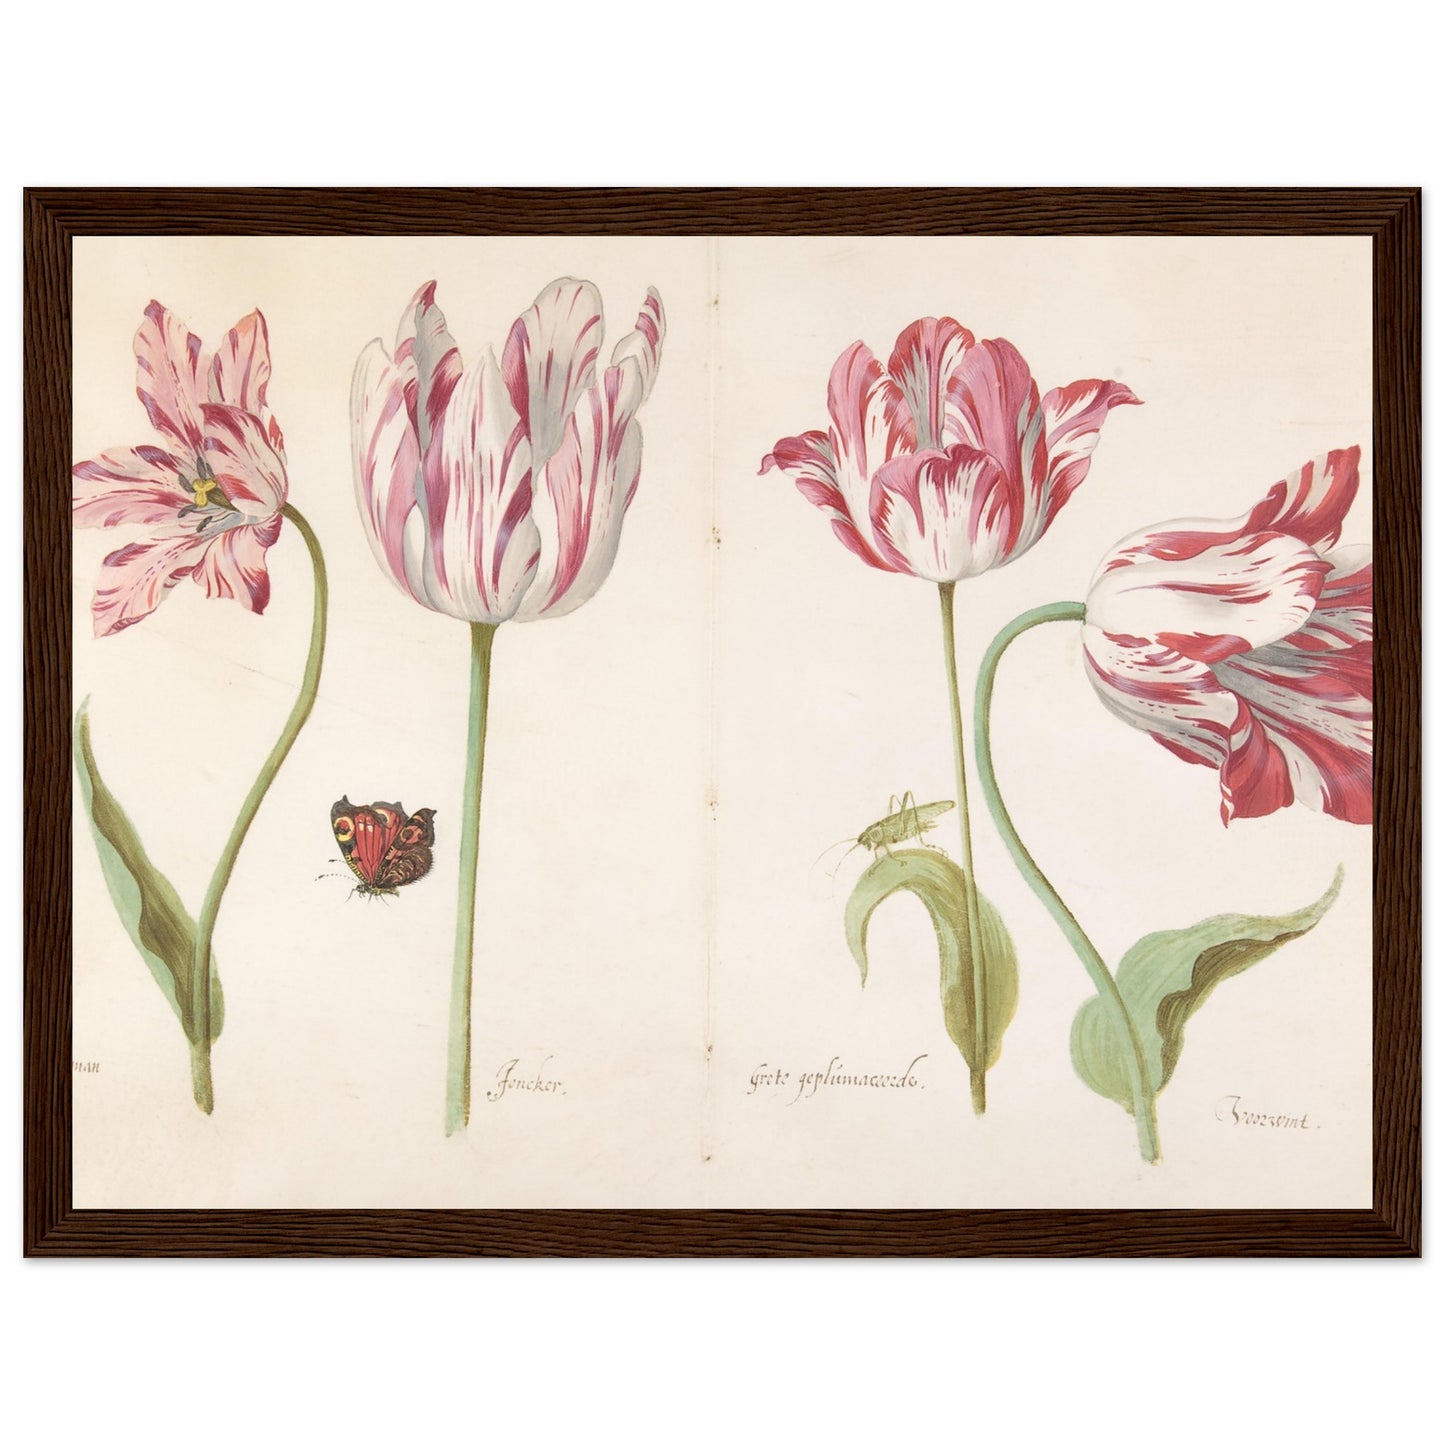 Four Tulips artwork print dark wood frame | By Print Room Ltd